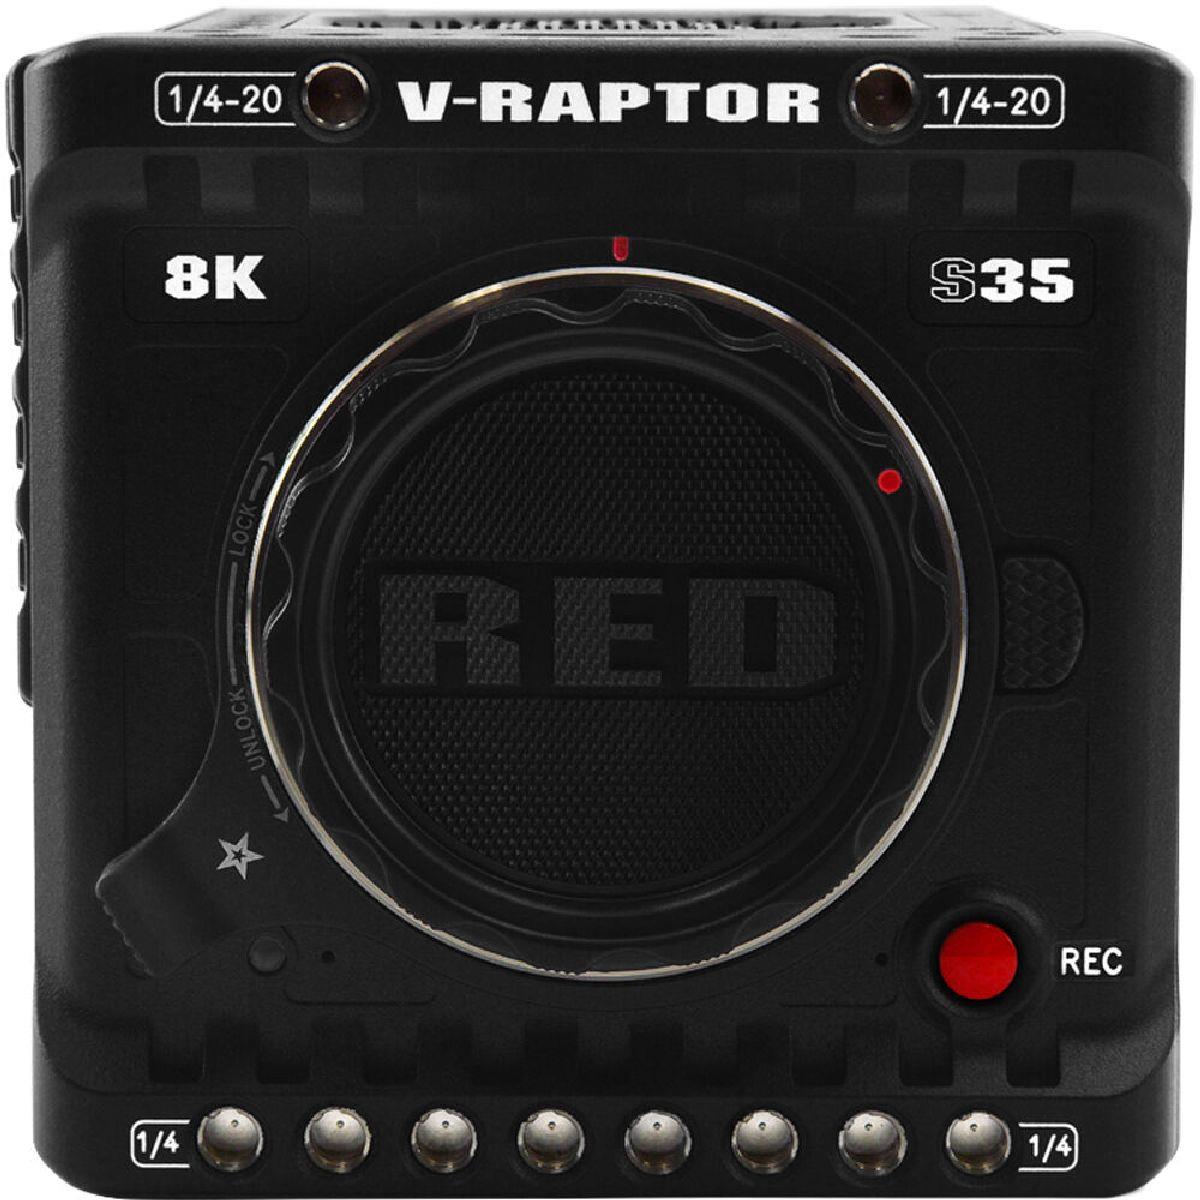 Image of RED Digital Cinema V-RAPTOR 8K S35 DSMC3 Cinema Camera